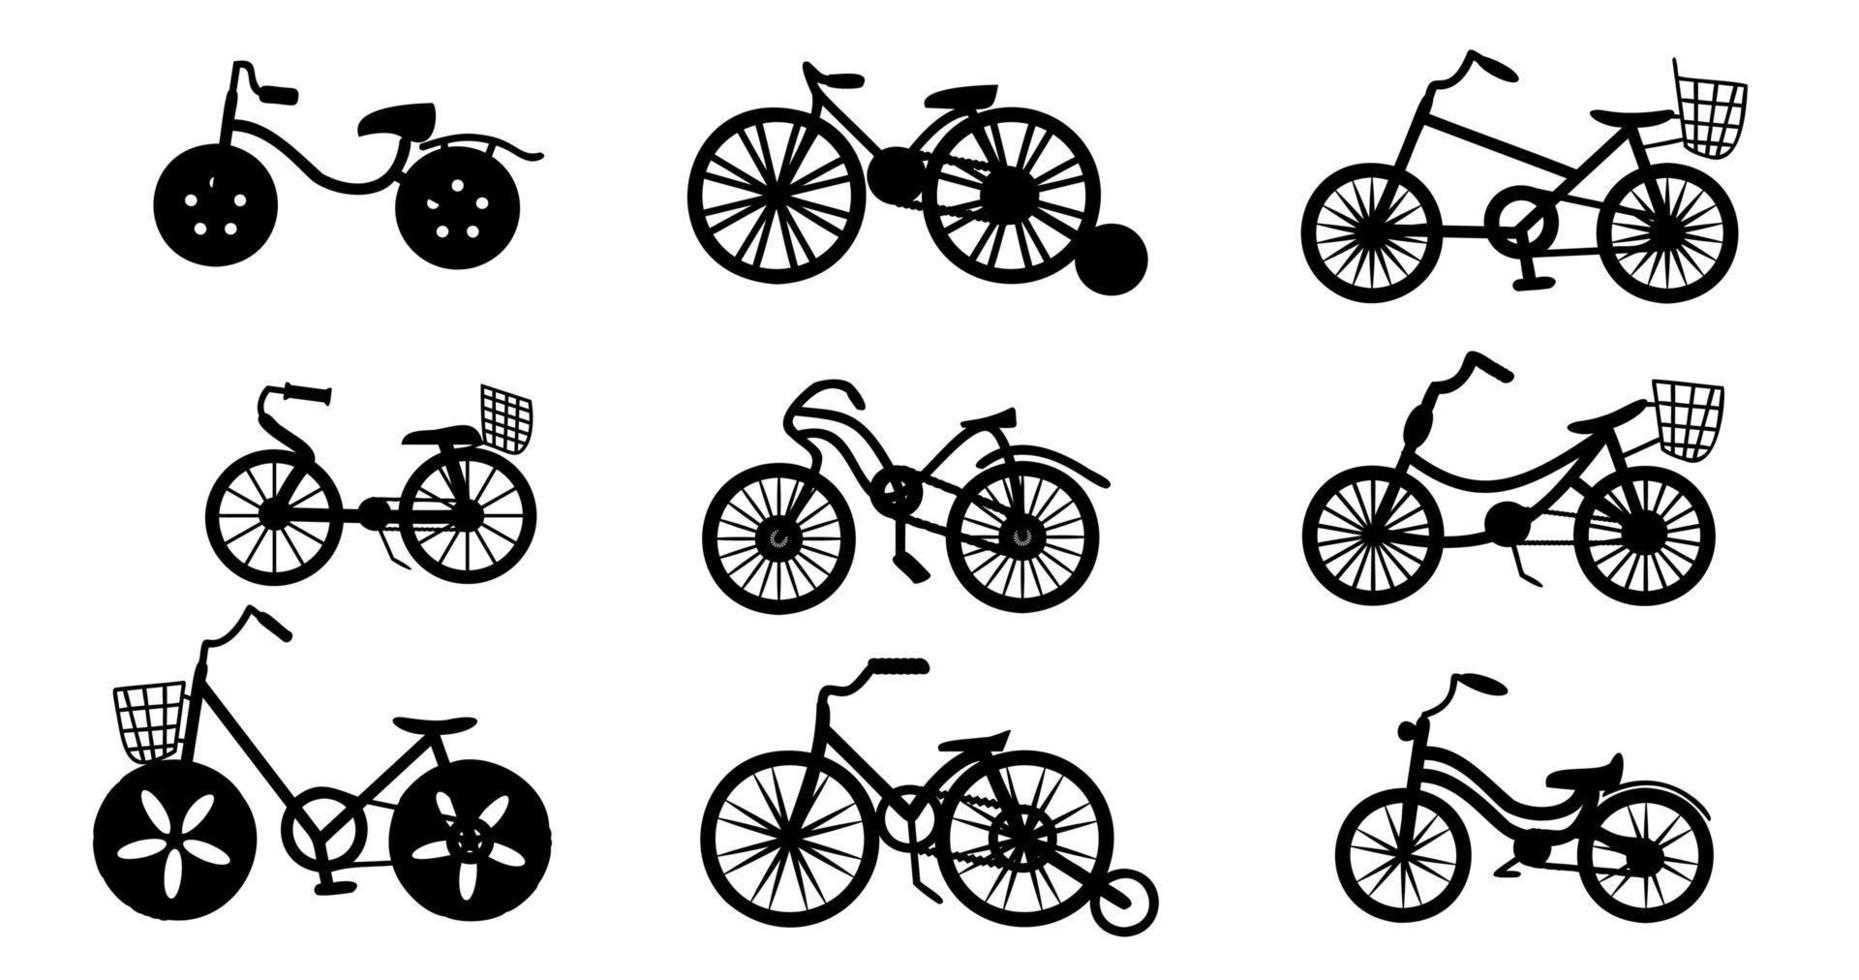 Kids bikes silhouettes set vector illustration for web.